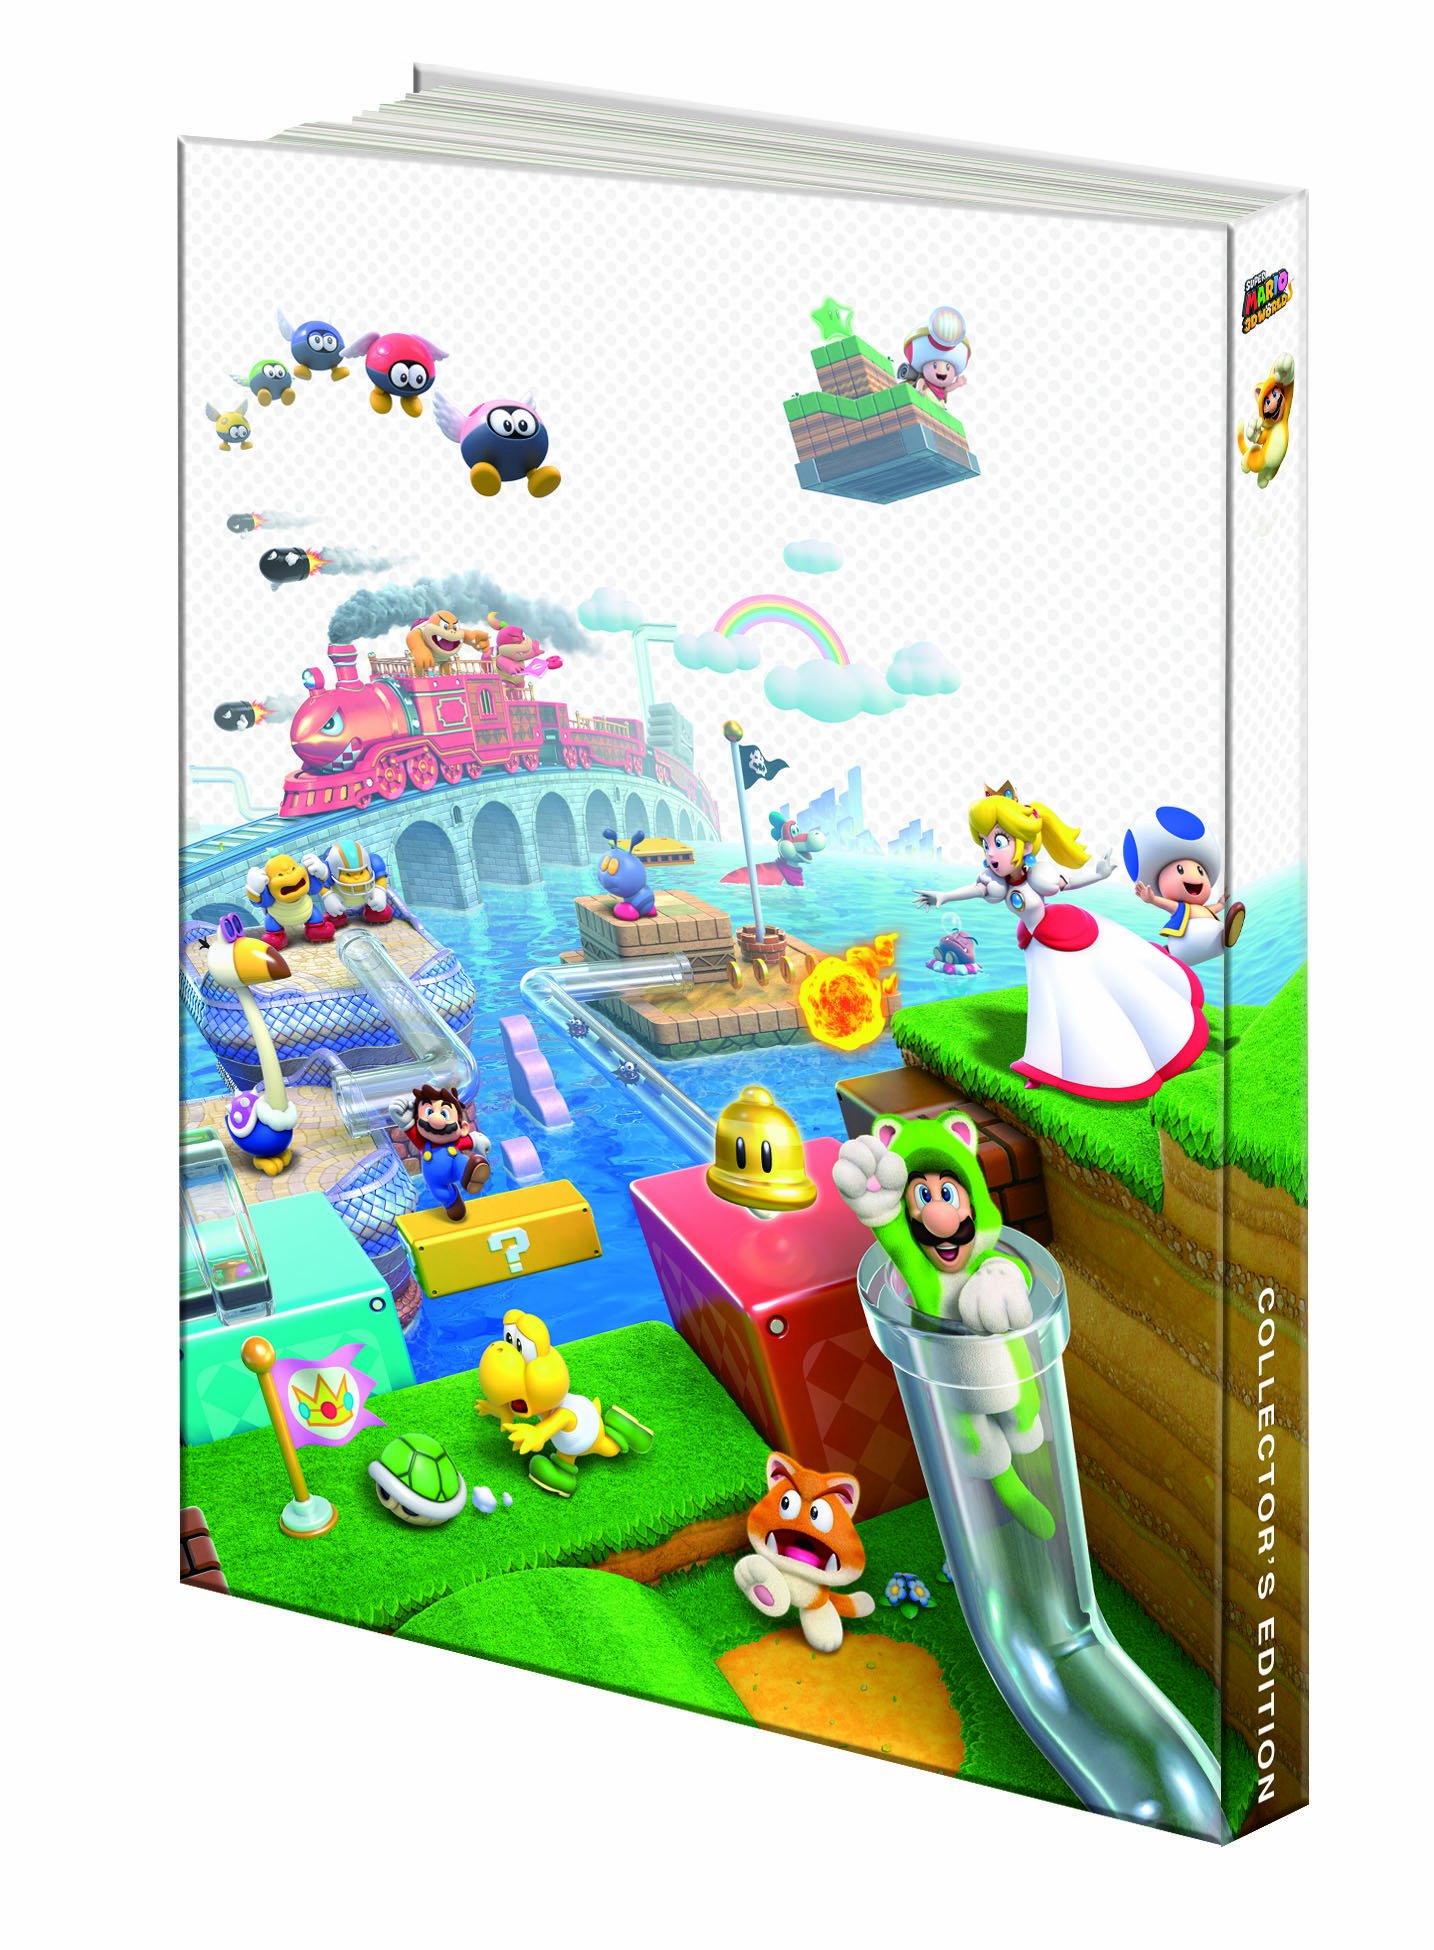 Super Mario 3D World Official Guide Book.